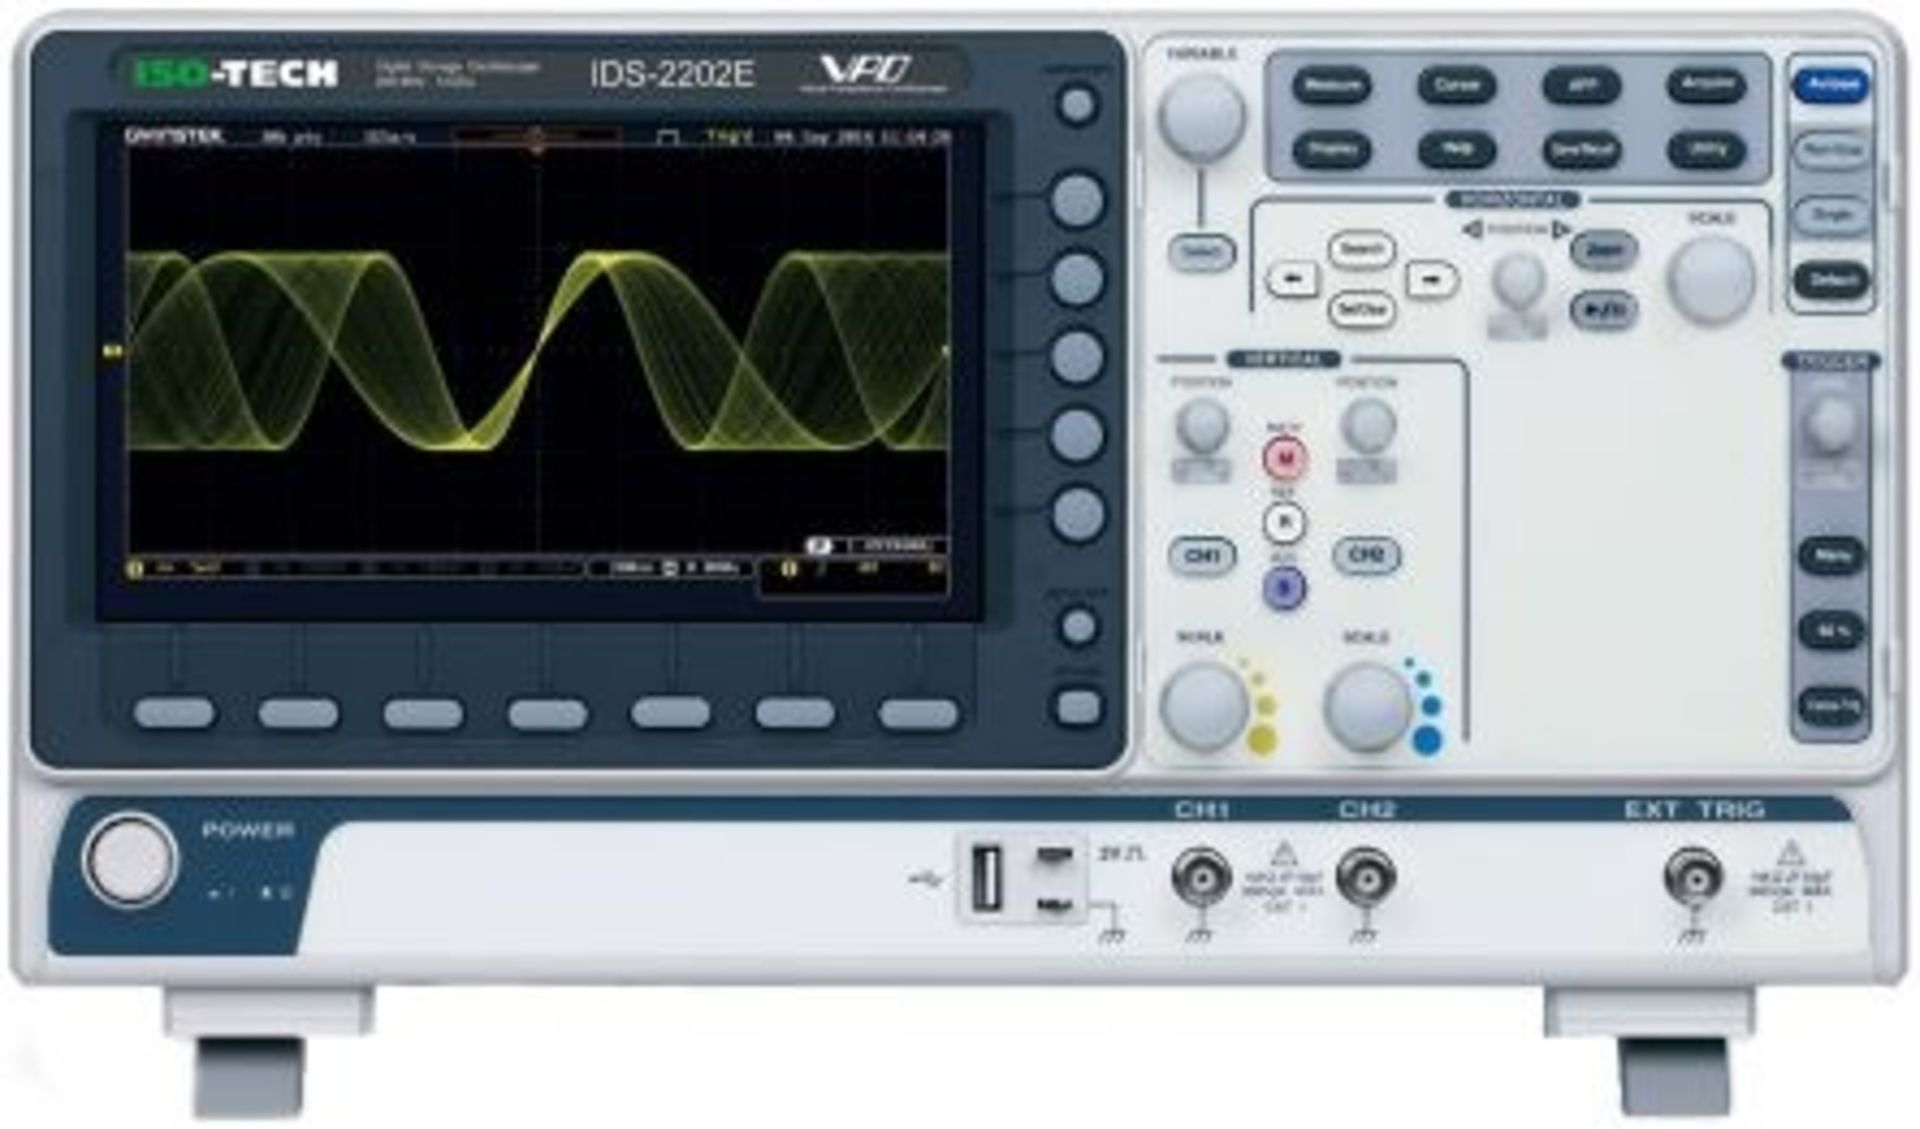 ISO-TECH IDS-2202E Digital Oscilloscope, Digital Storage, 2 Channels, 200MHz